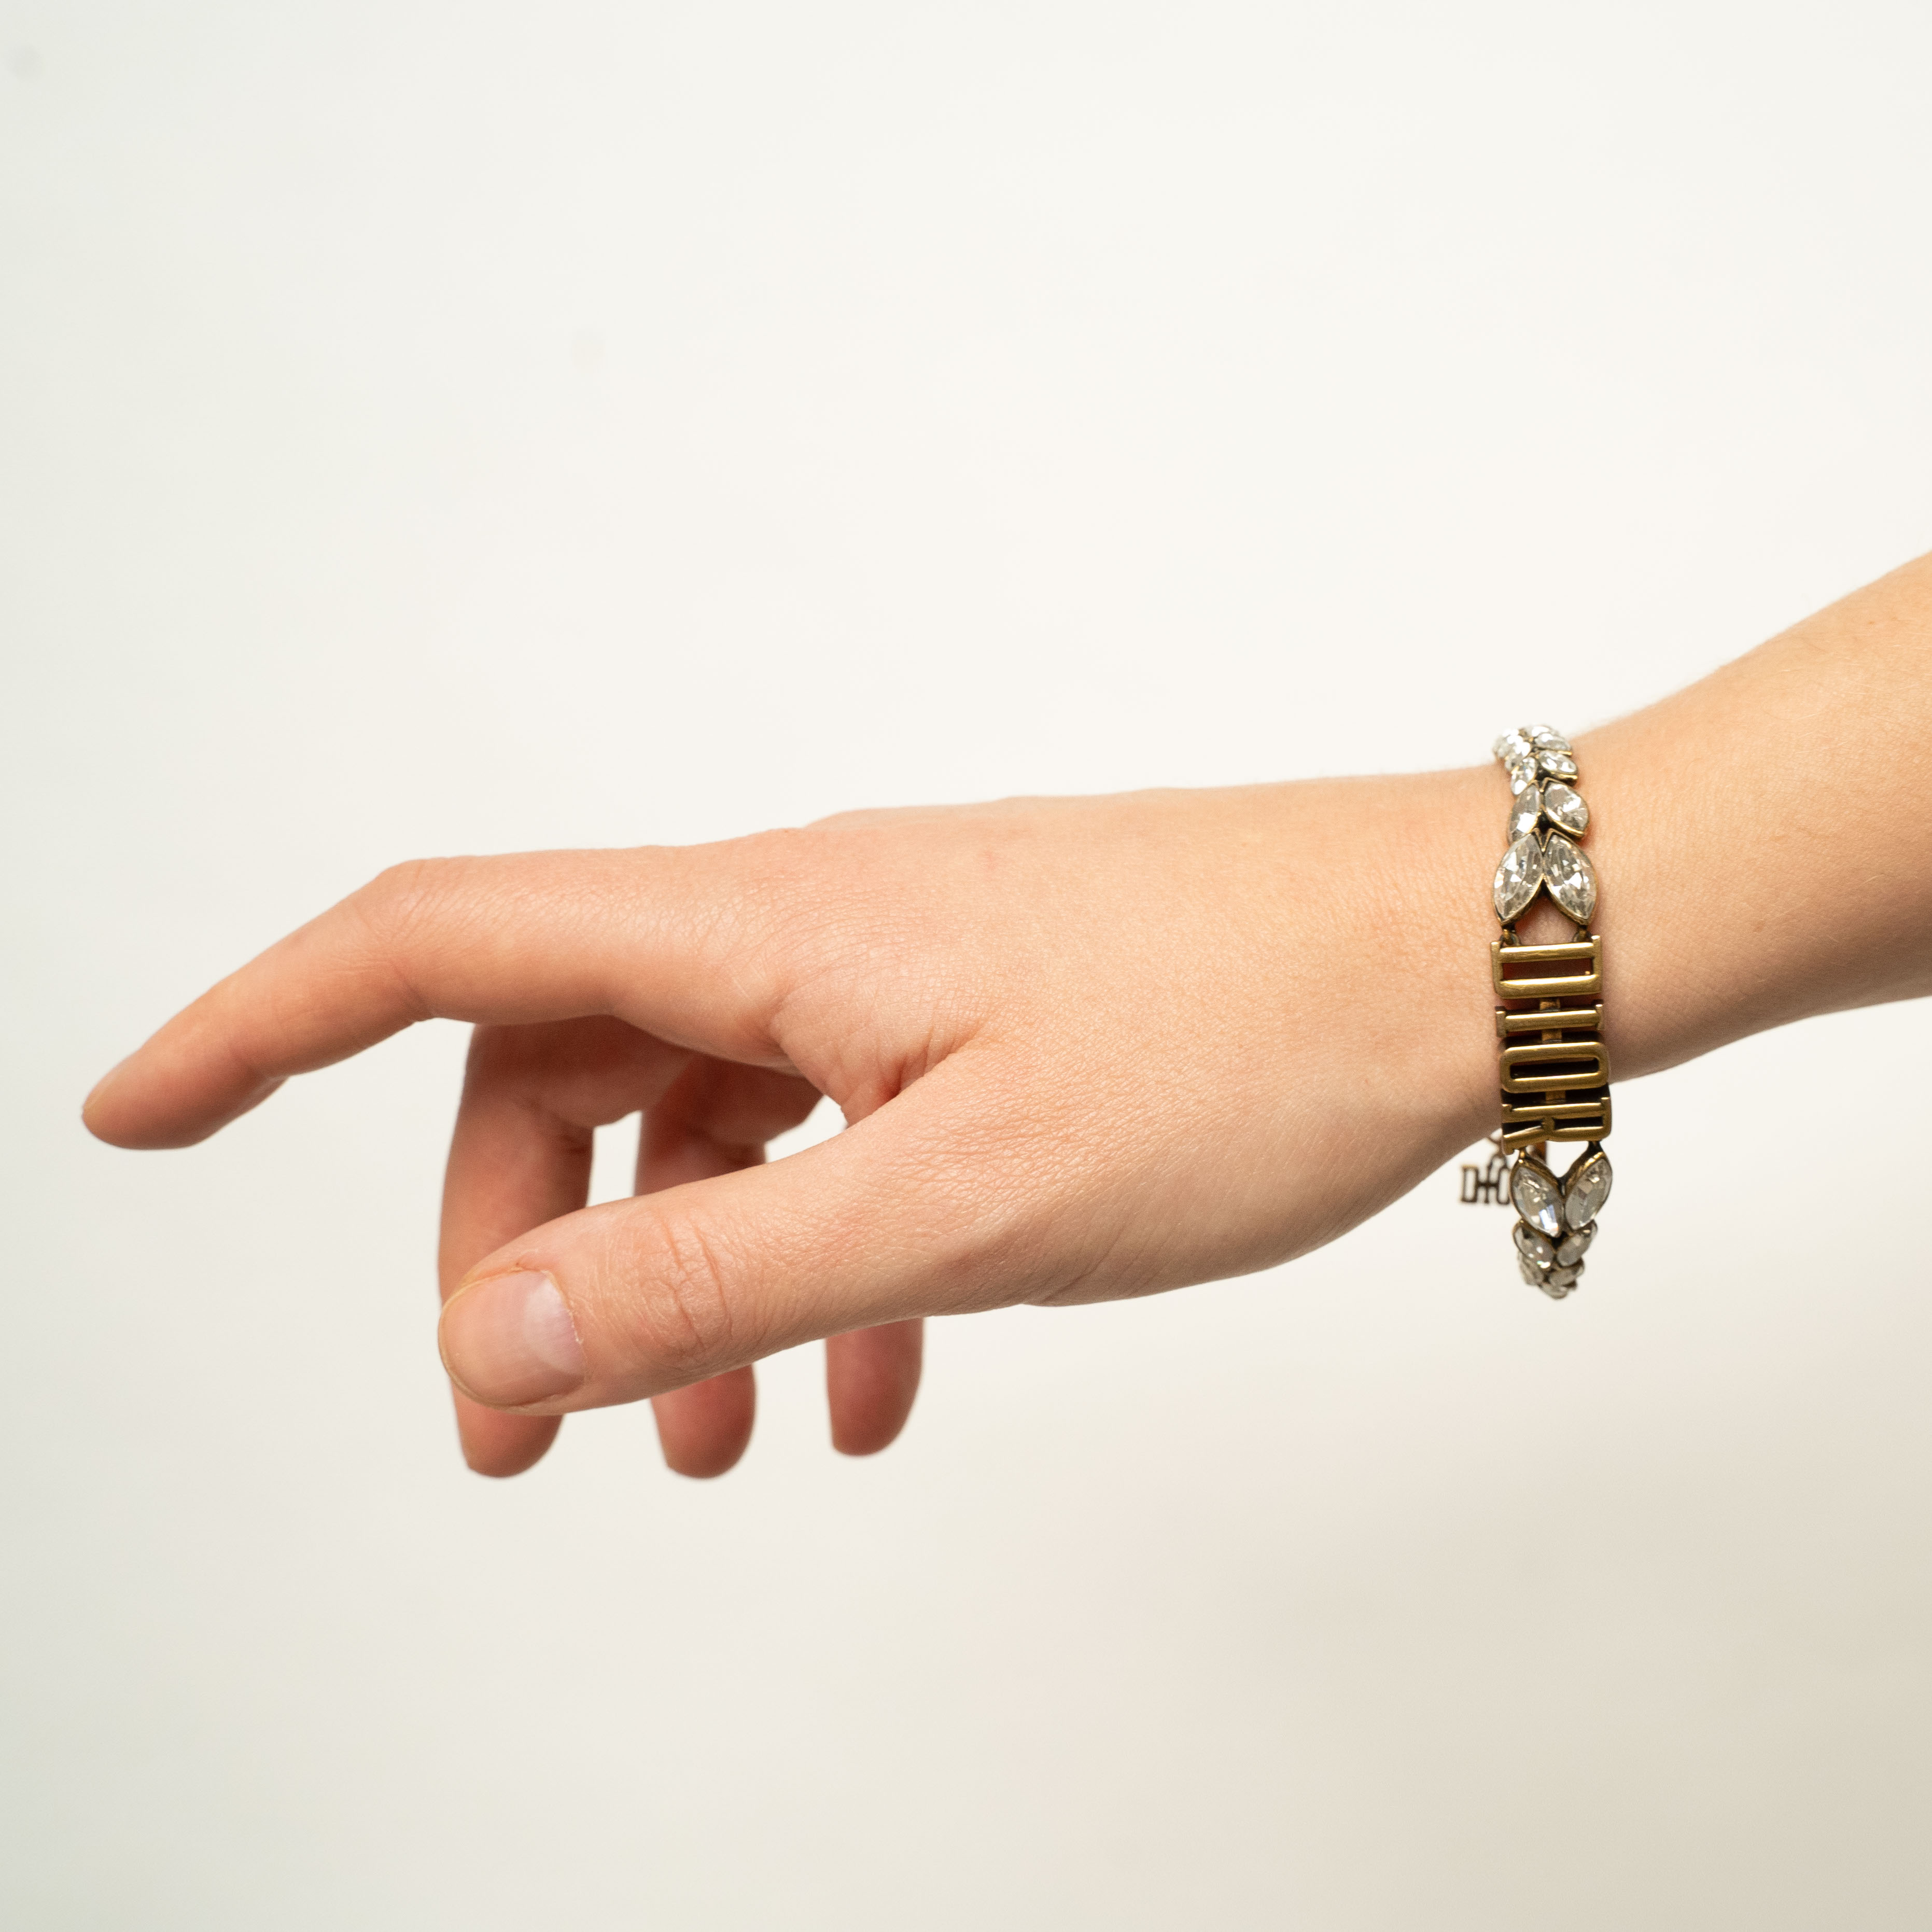 Christian Dior Dio(r)evolution bracelet with crystals